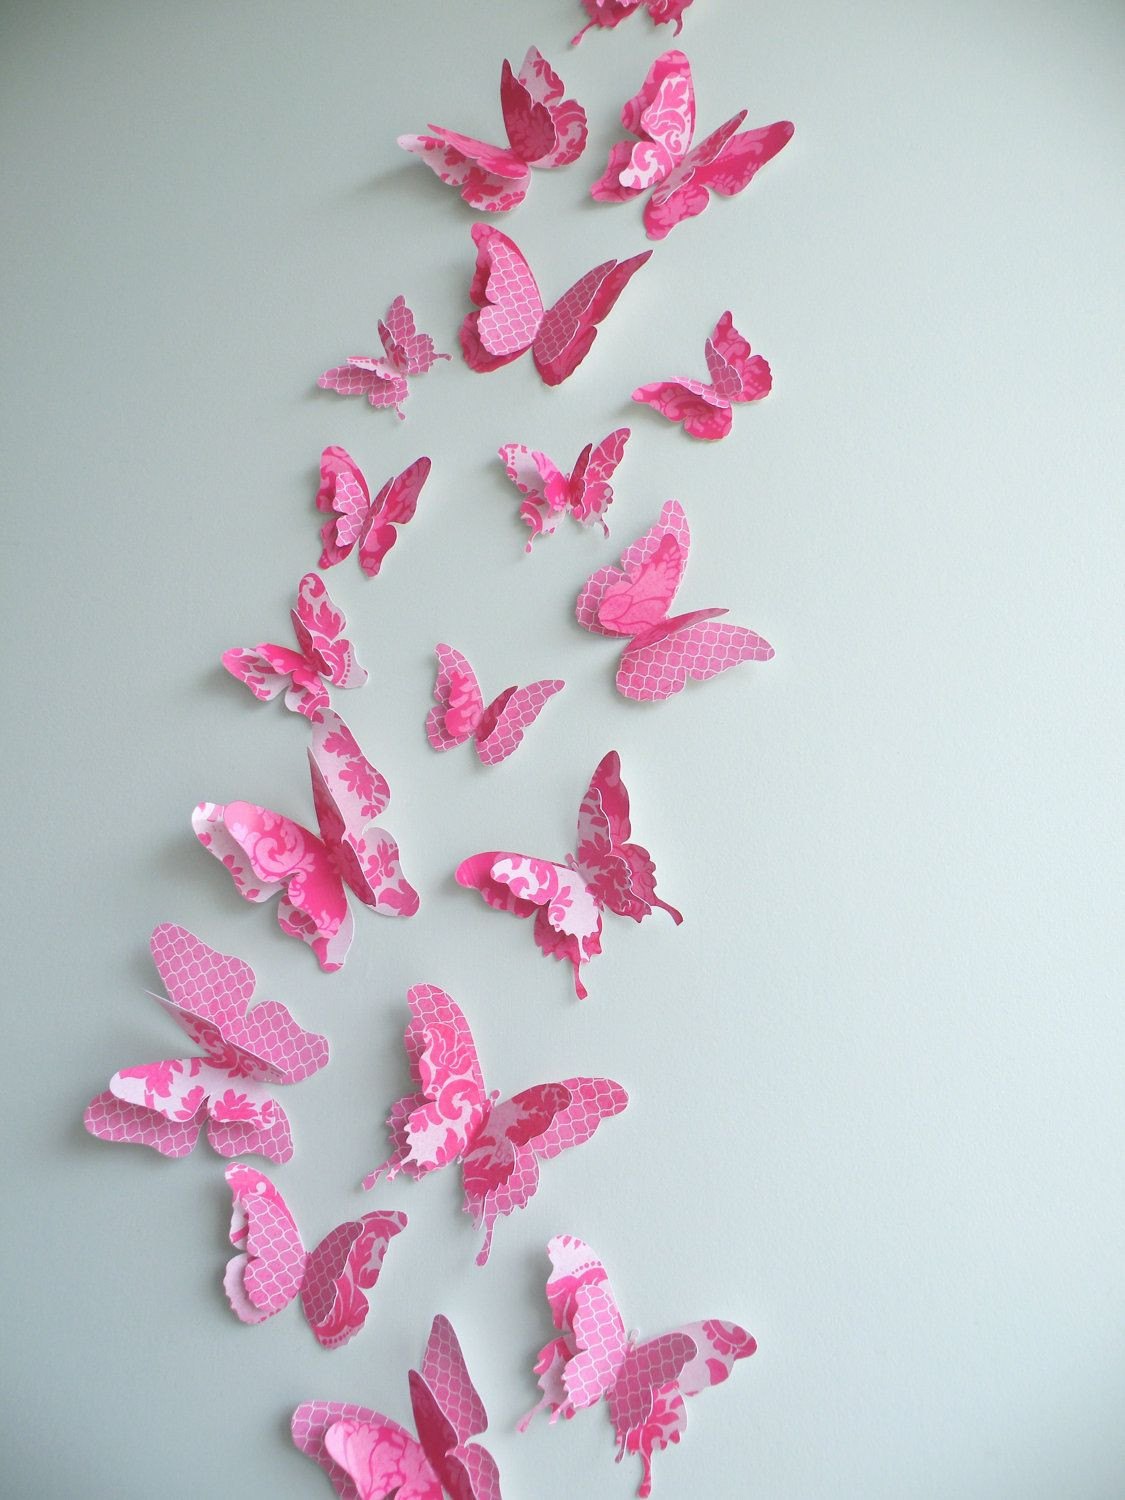 Butterfly Kids Decor
 3D Butterfly wall art to decorate Nursery Children s Room